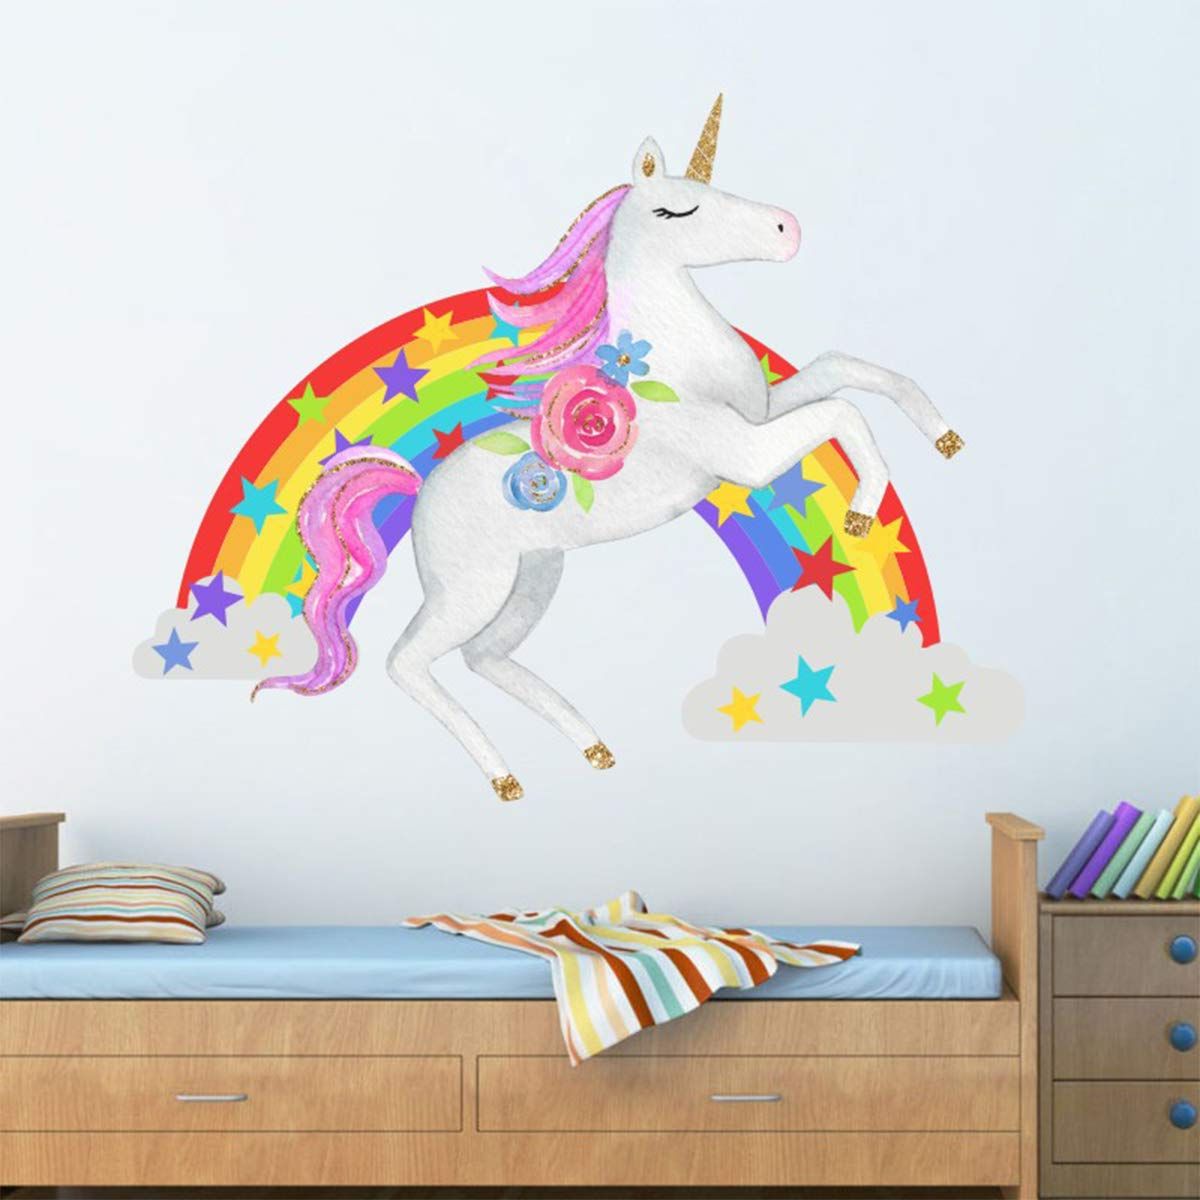 Newest Bamsod Unicorn Wall Stickers Rainbow Kids Wall Decal Art Pertaining To Rainbow Wall Art (View 10 of 20)